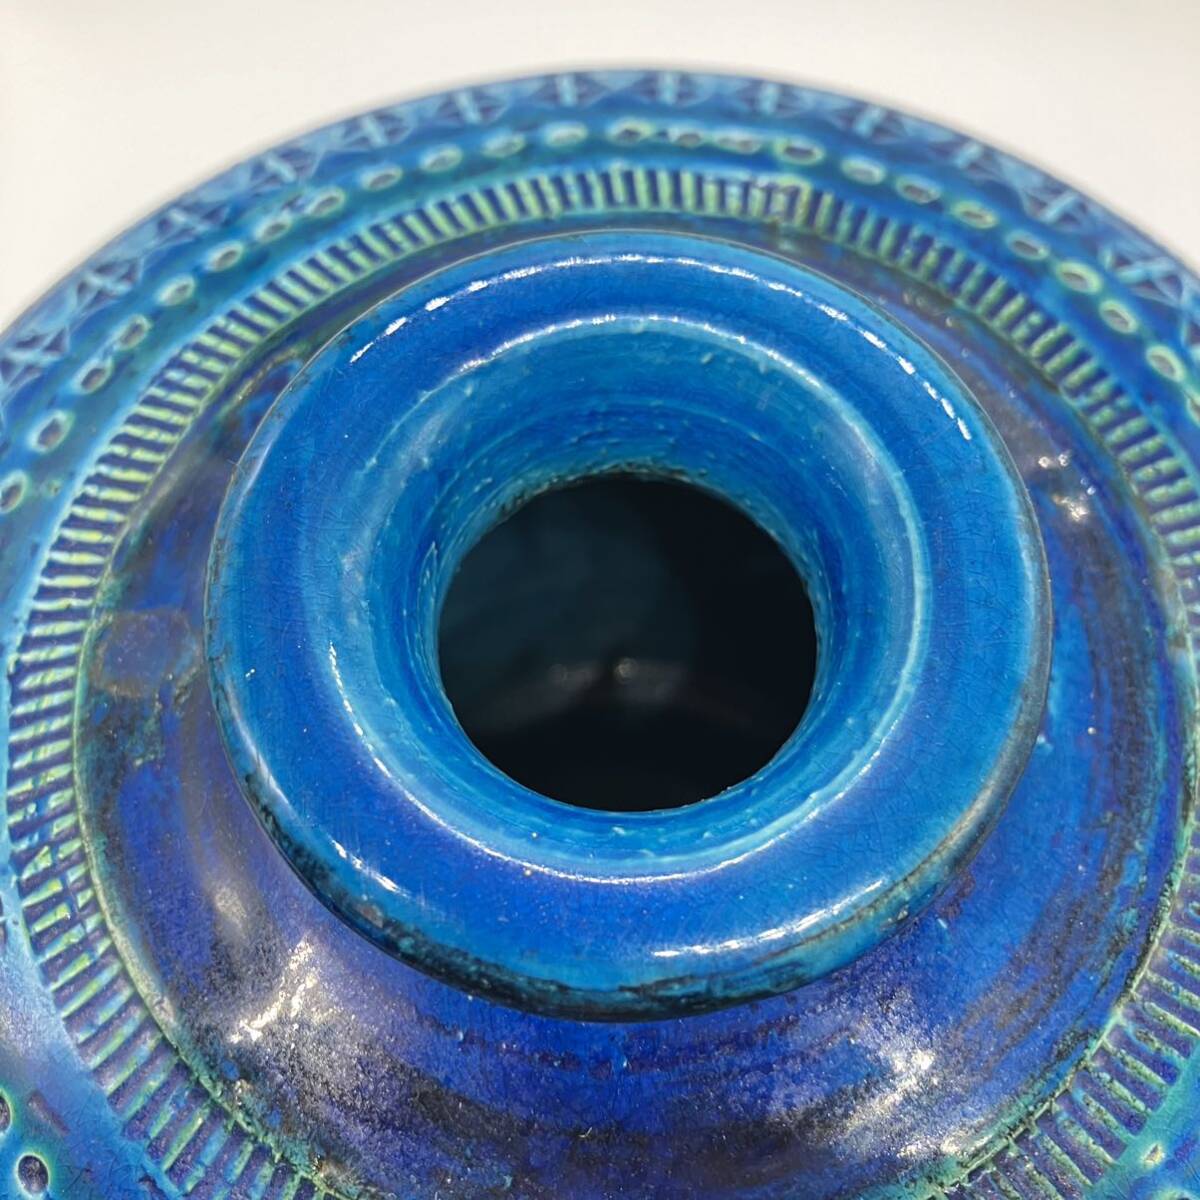 1 иен ~ 4F FLAVIA MONTELUPO ITALY кувшин "hu" керамика ваза для цветов ваза цветок входить fla Via Италия производства limi ni голубой интерьер синий диаметр примерно 23cm высота примерно 24cm